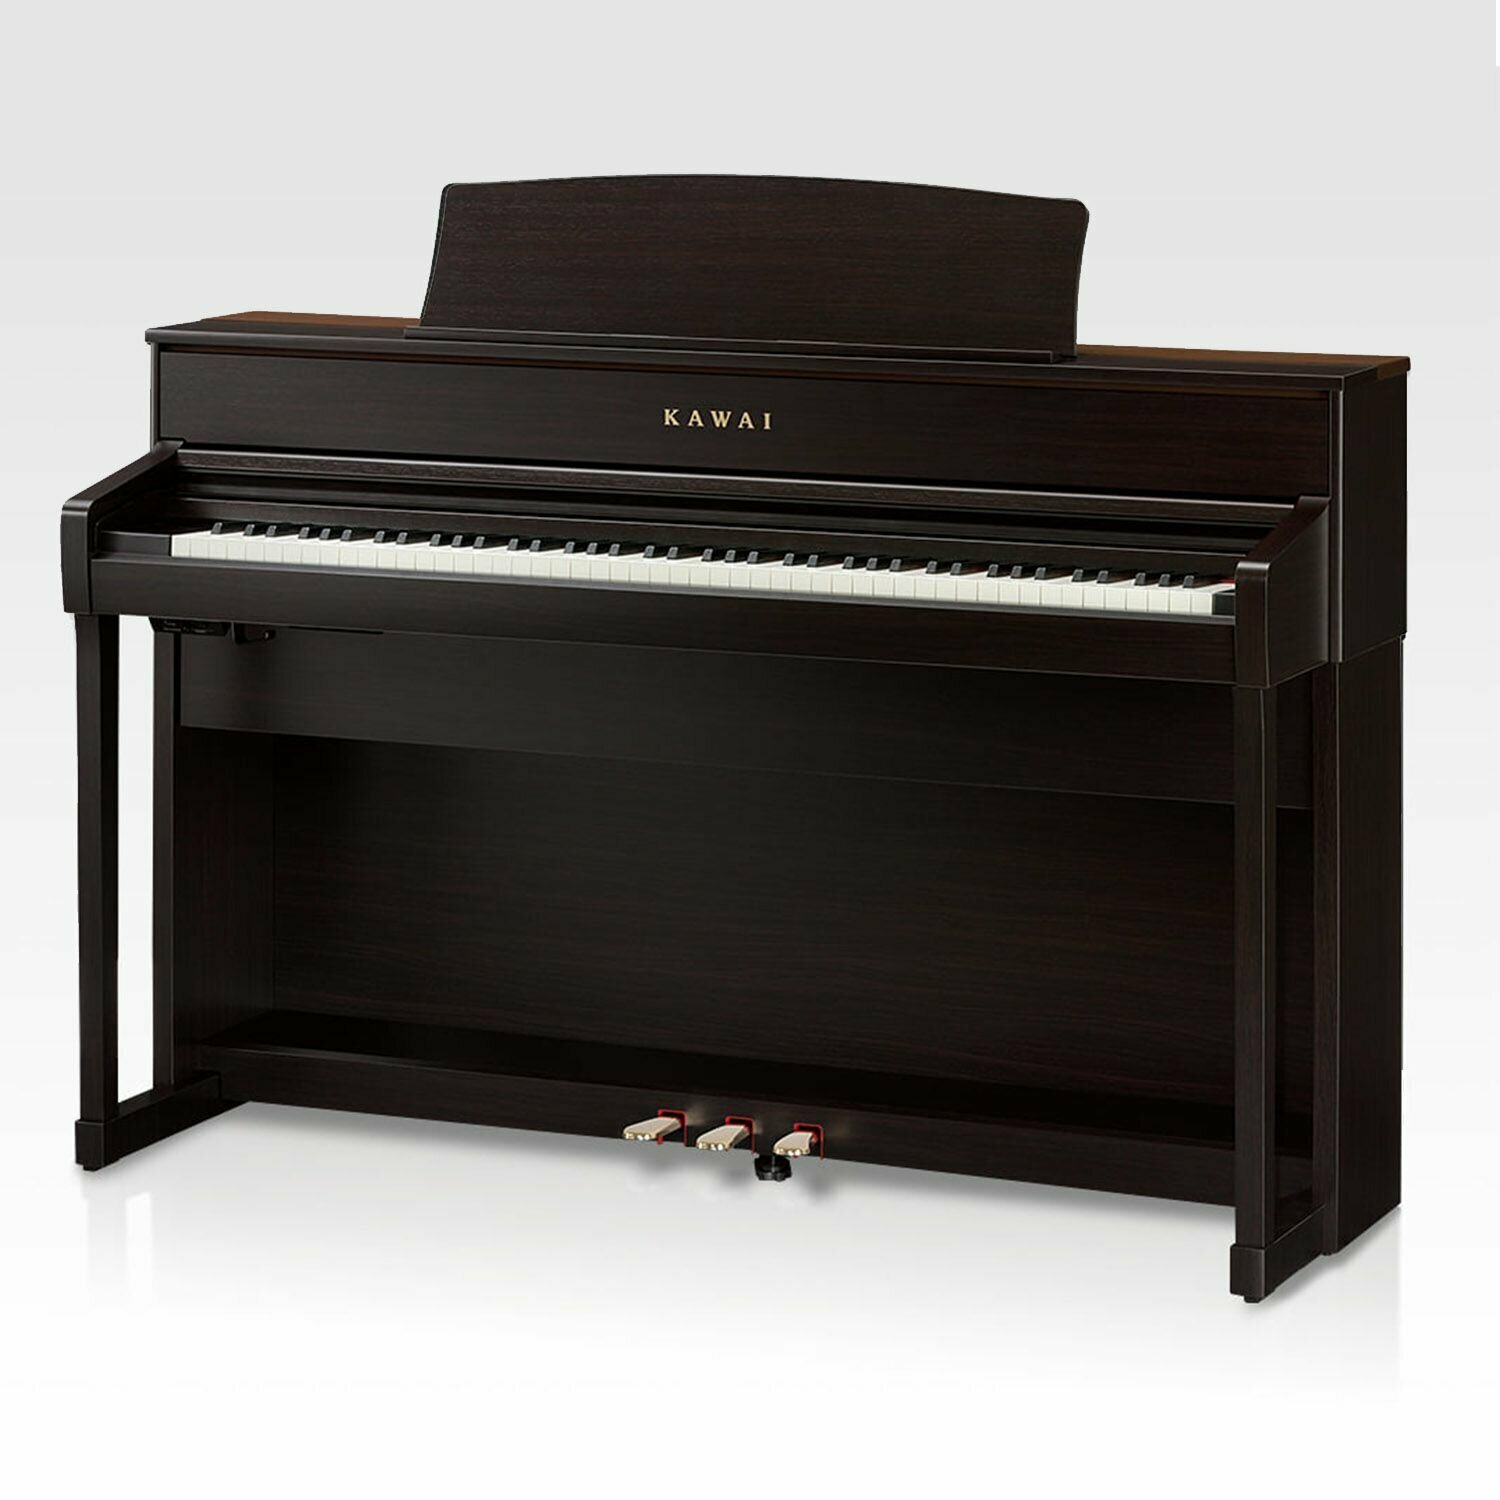 Kawai ca701 r цифровое пианино с банкеткой, 88 клавиш, механика gfiii, 256 полифония, 96 тембров